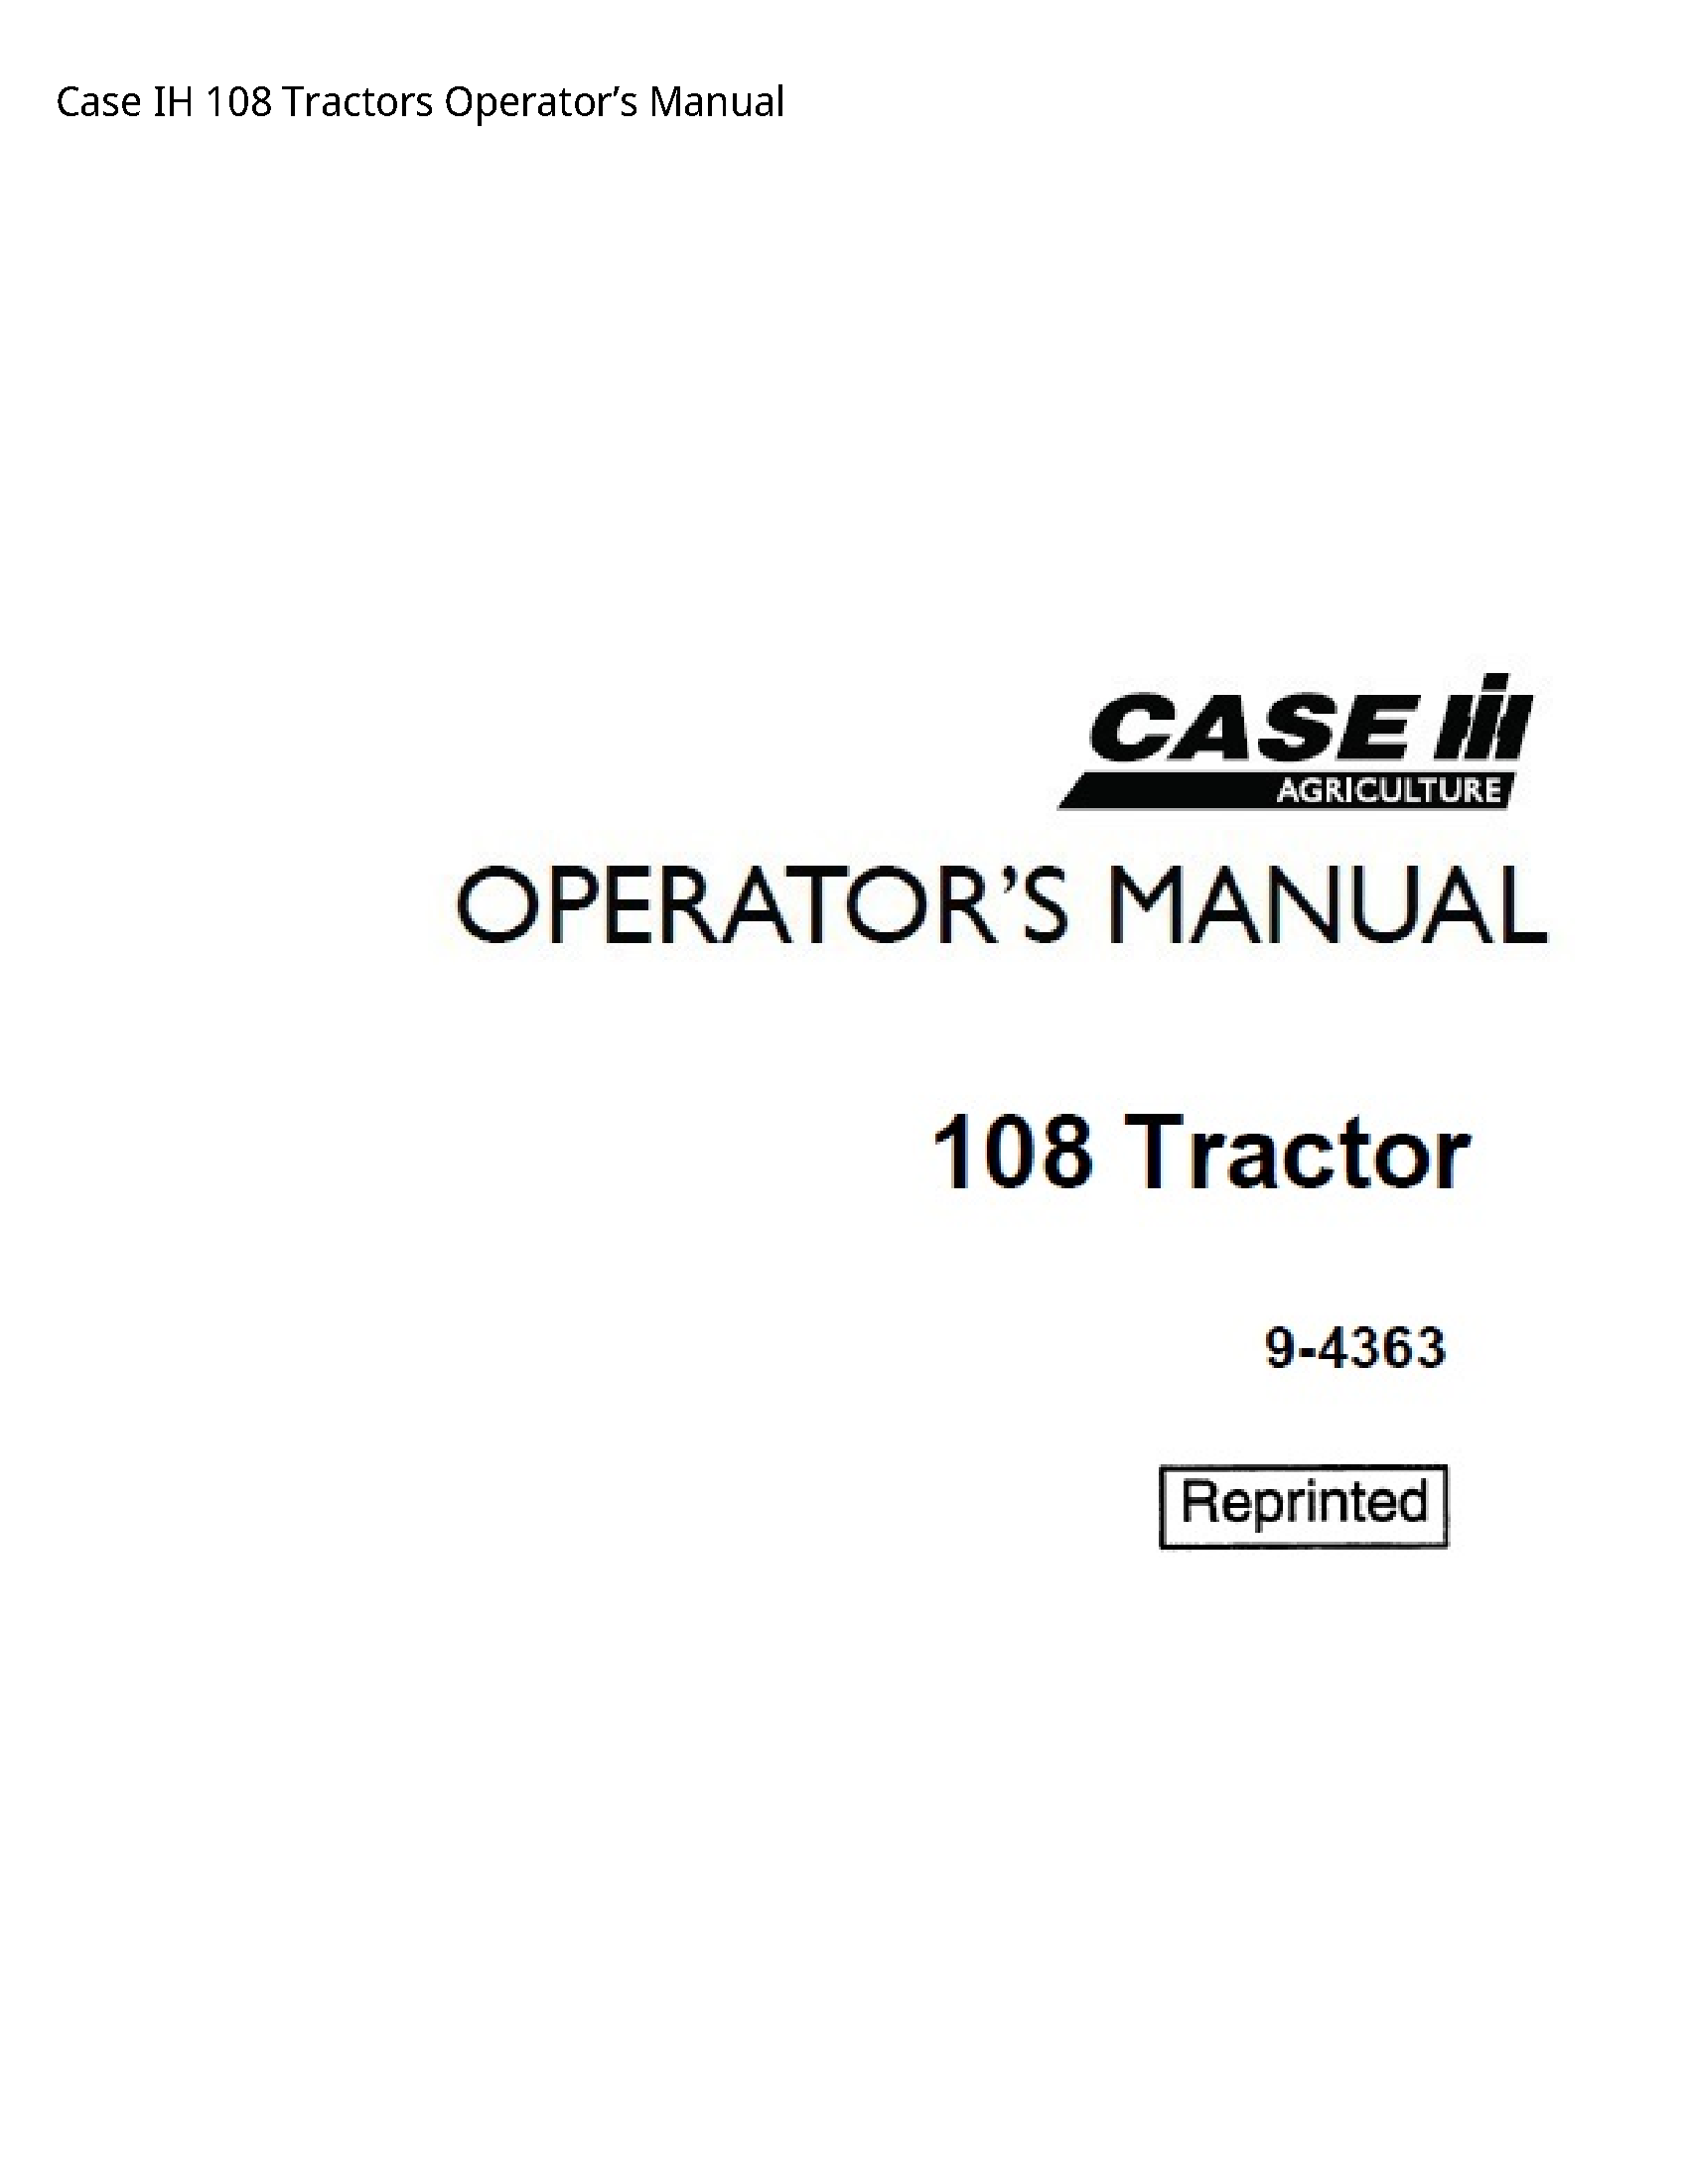 Case/Case IH 108 IH Tractors Operator’s manual